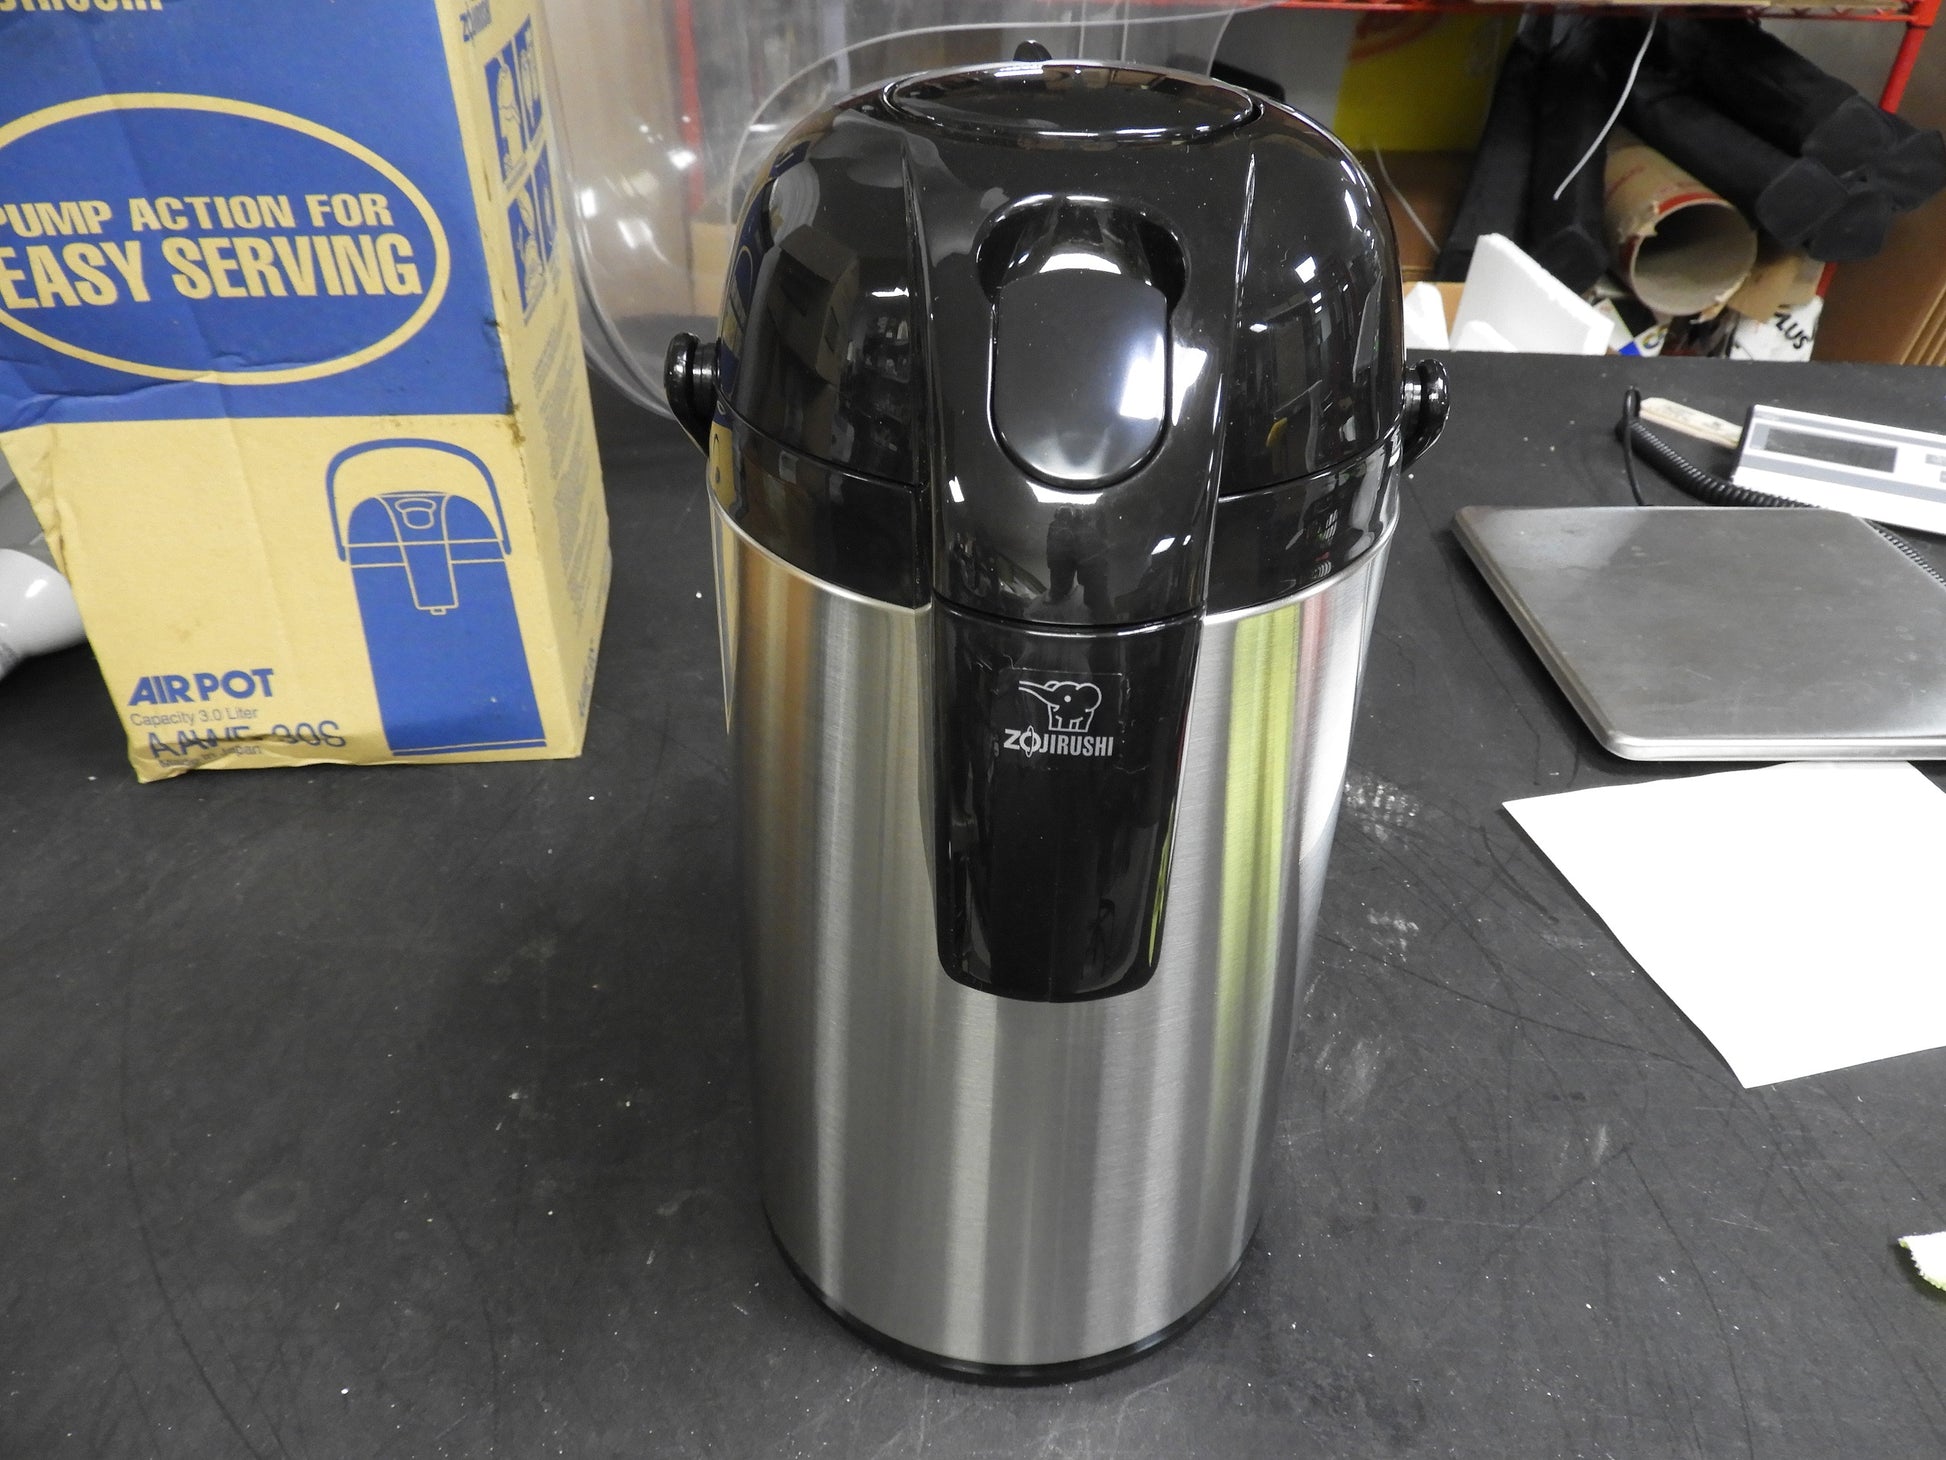 3 Liter Airpot Beverage 24hr Hot Coffee Dispenser with Push Button